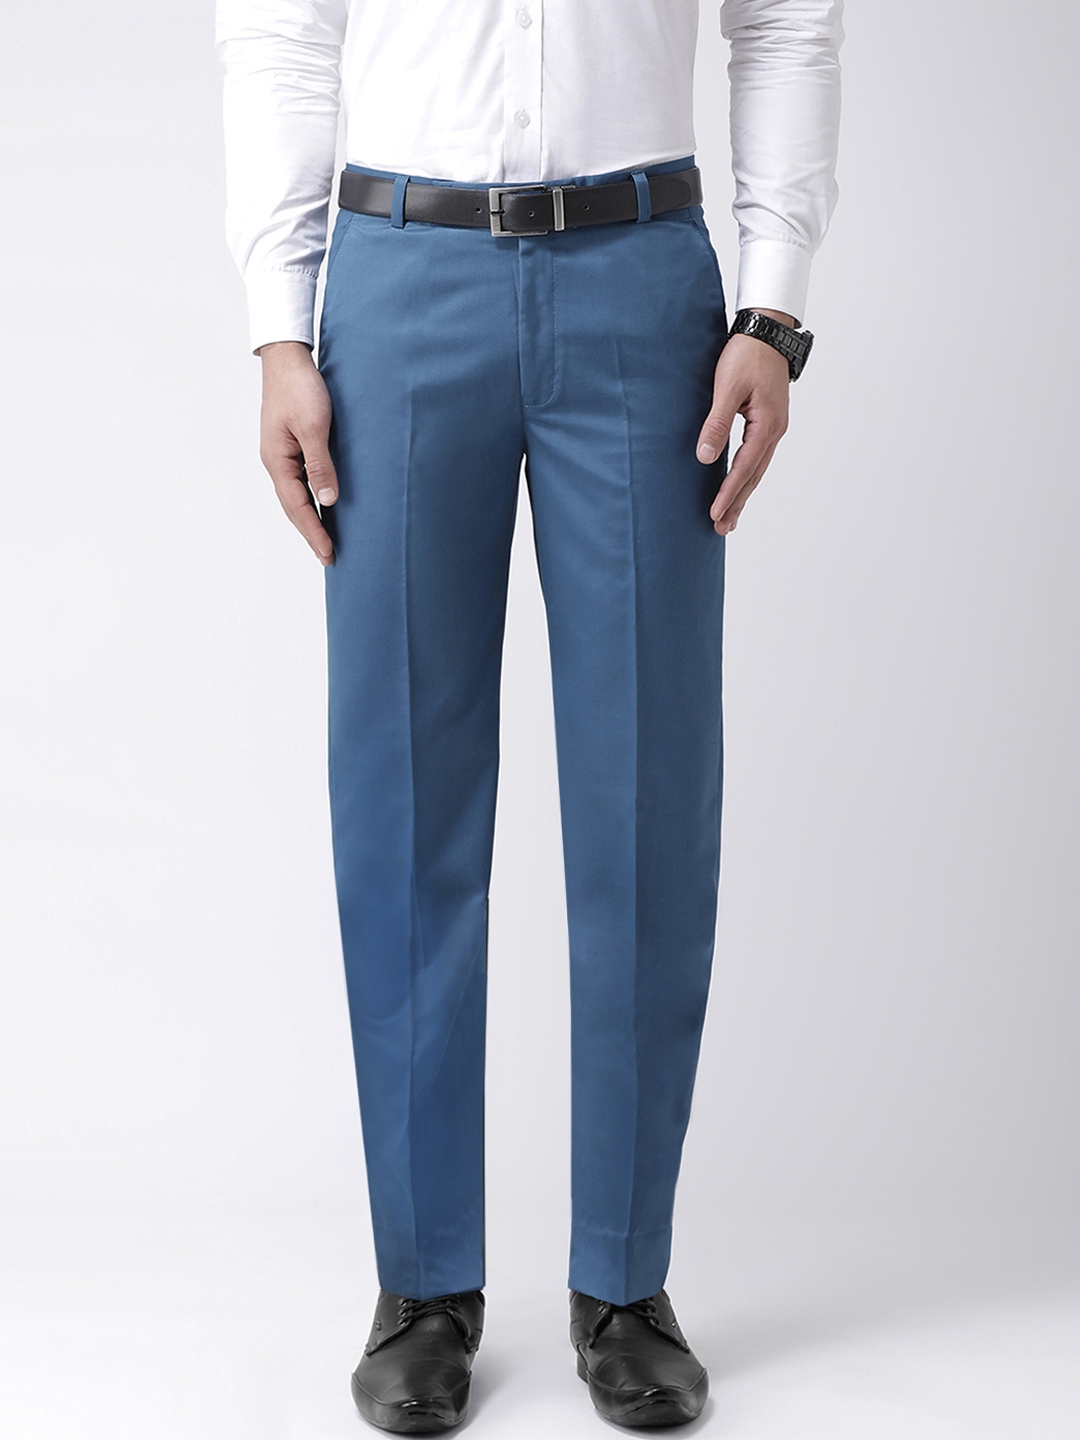 Buy trend Men Navy Blue Regular Fit Solid Formal Trousers online   Looksgudin